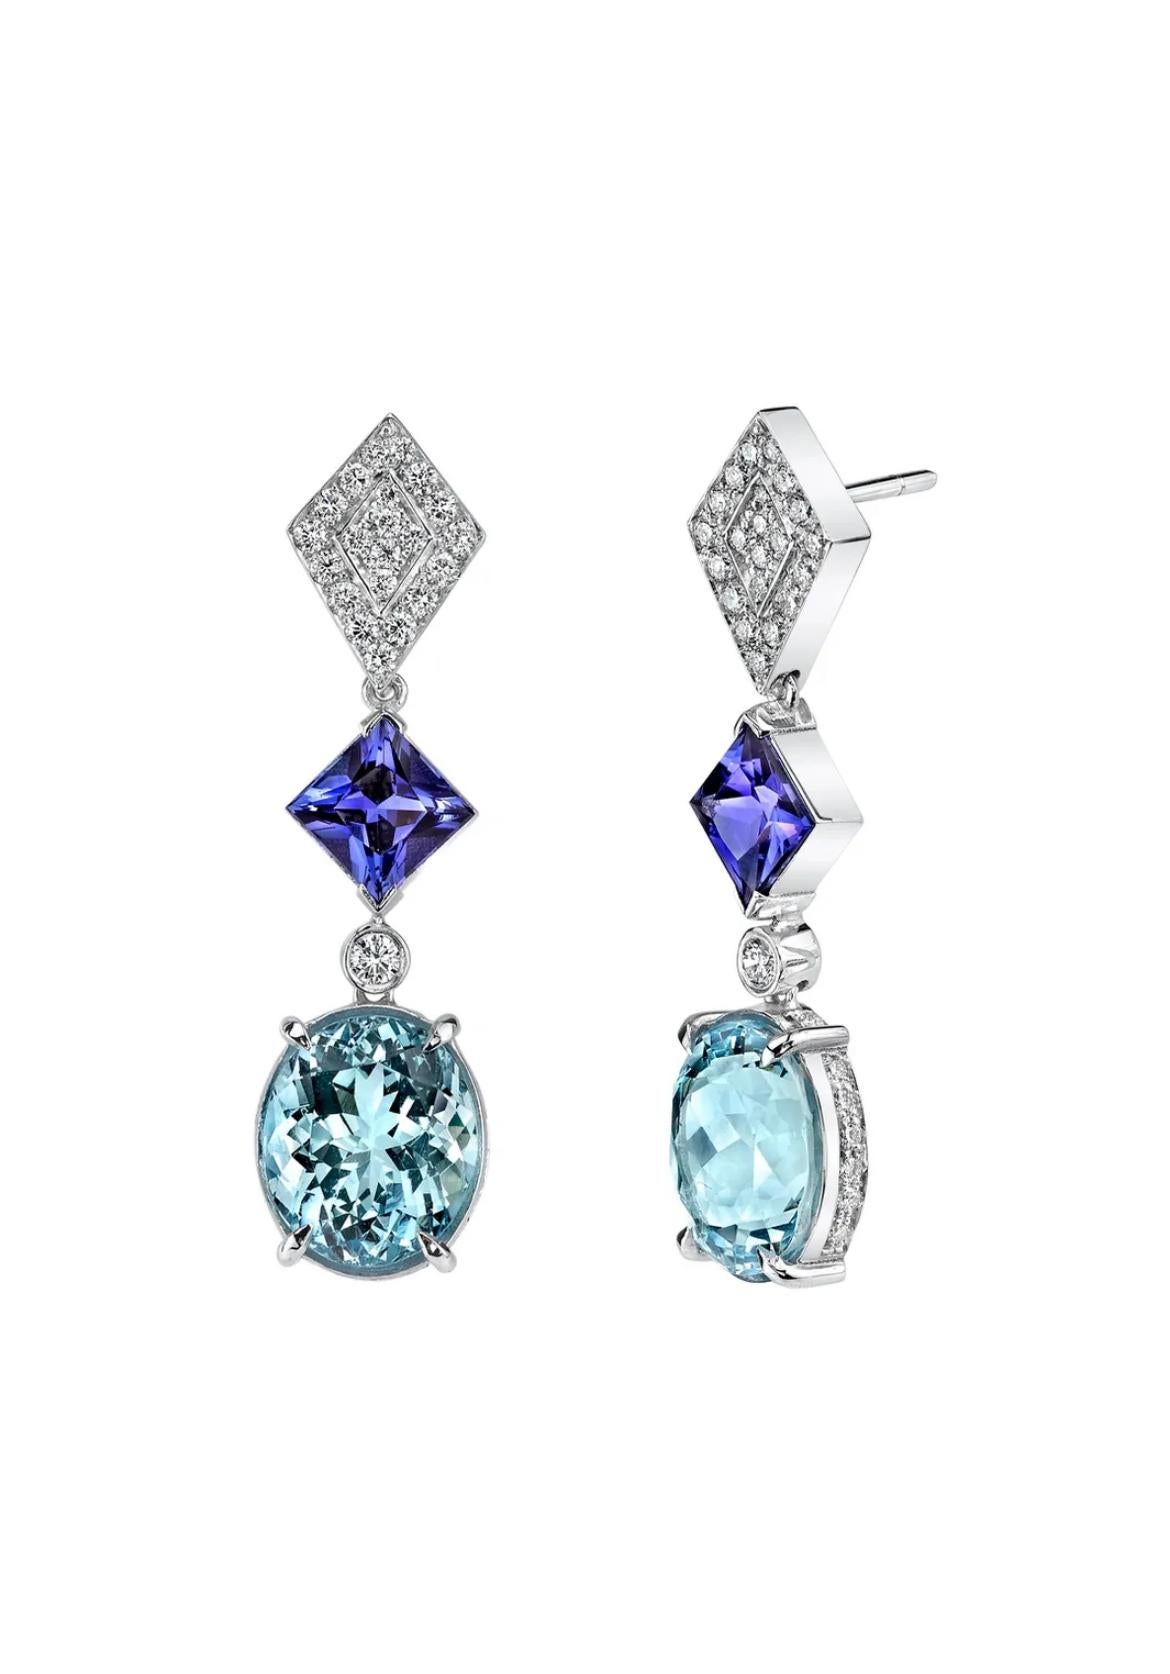 6.99ct princess-cut Tanzanite and 2.65ct oval Aquamarine 18K earrings.  For Sale